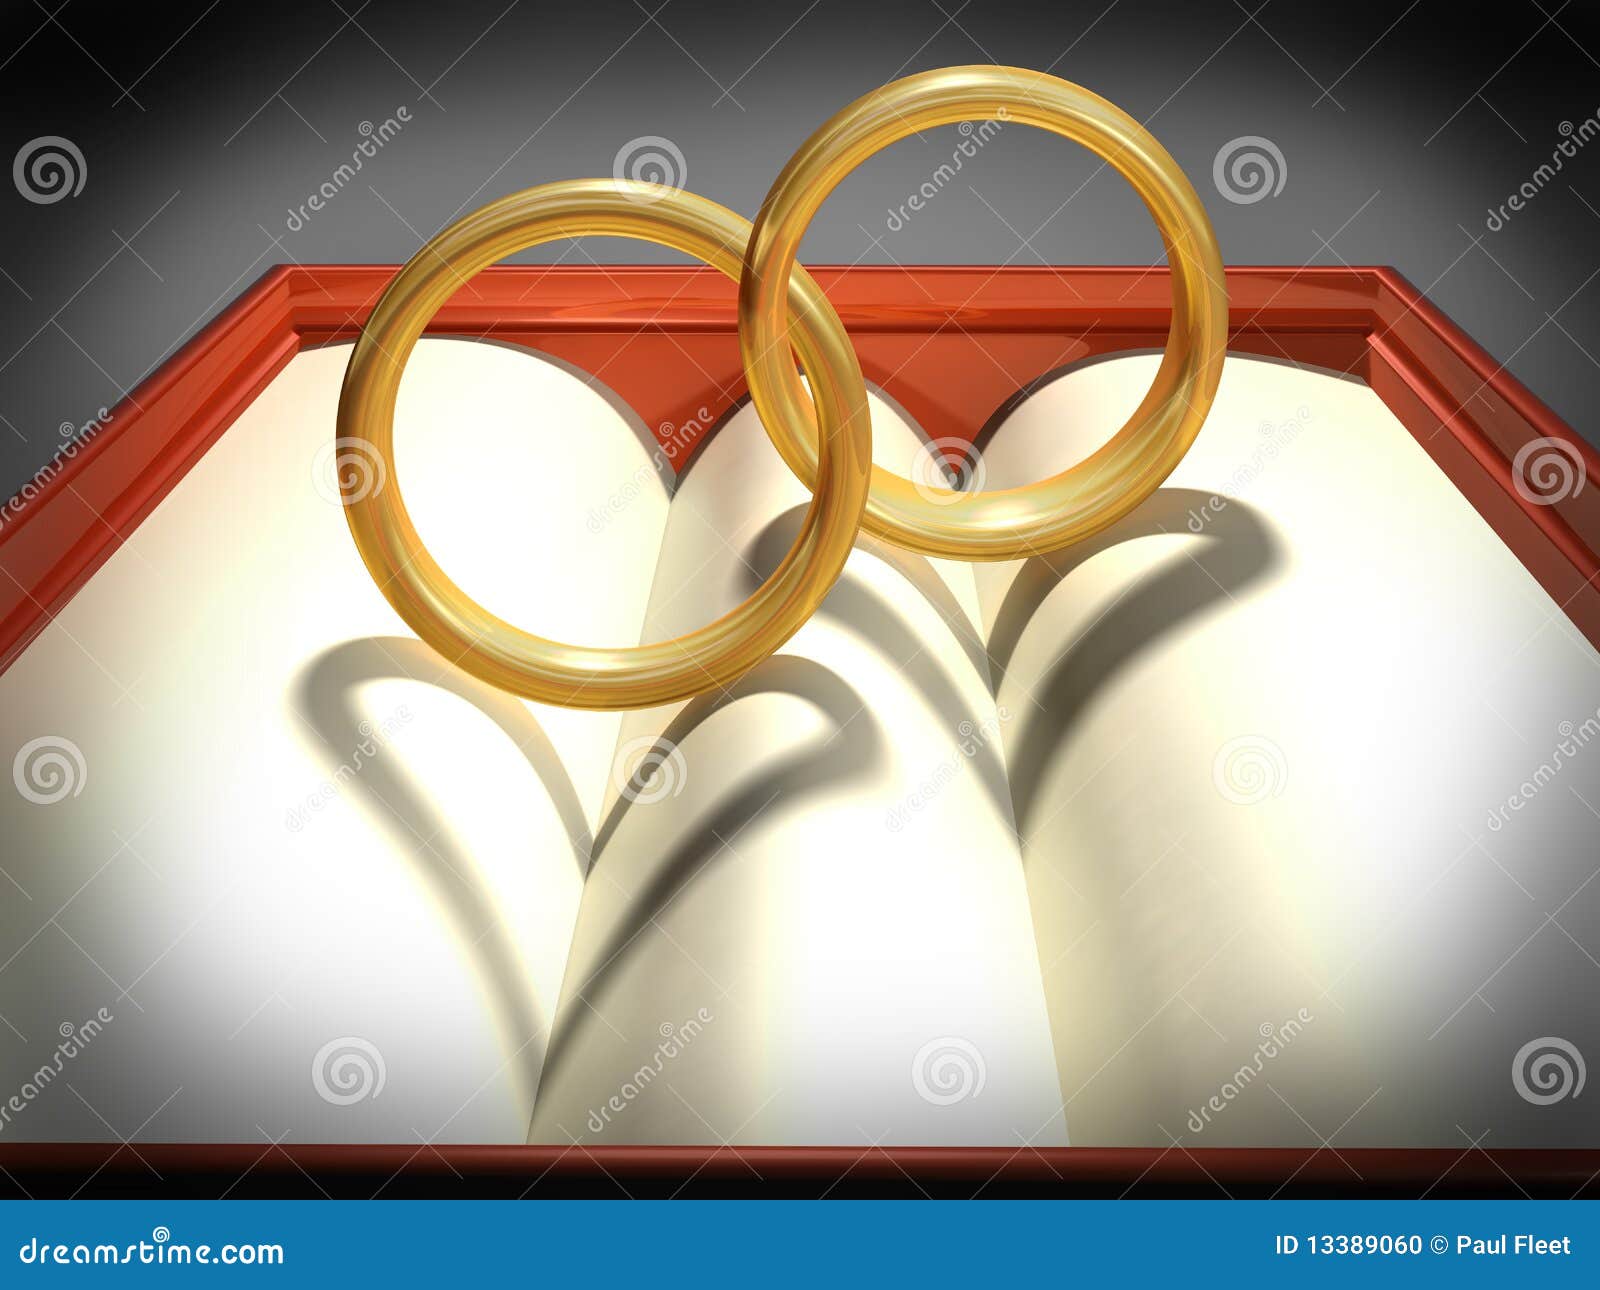 interlocking wedding rings clipart - photo #36